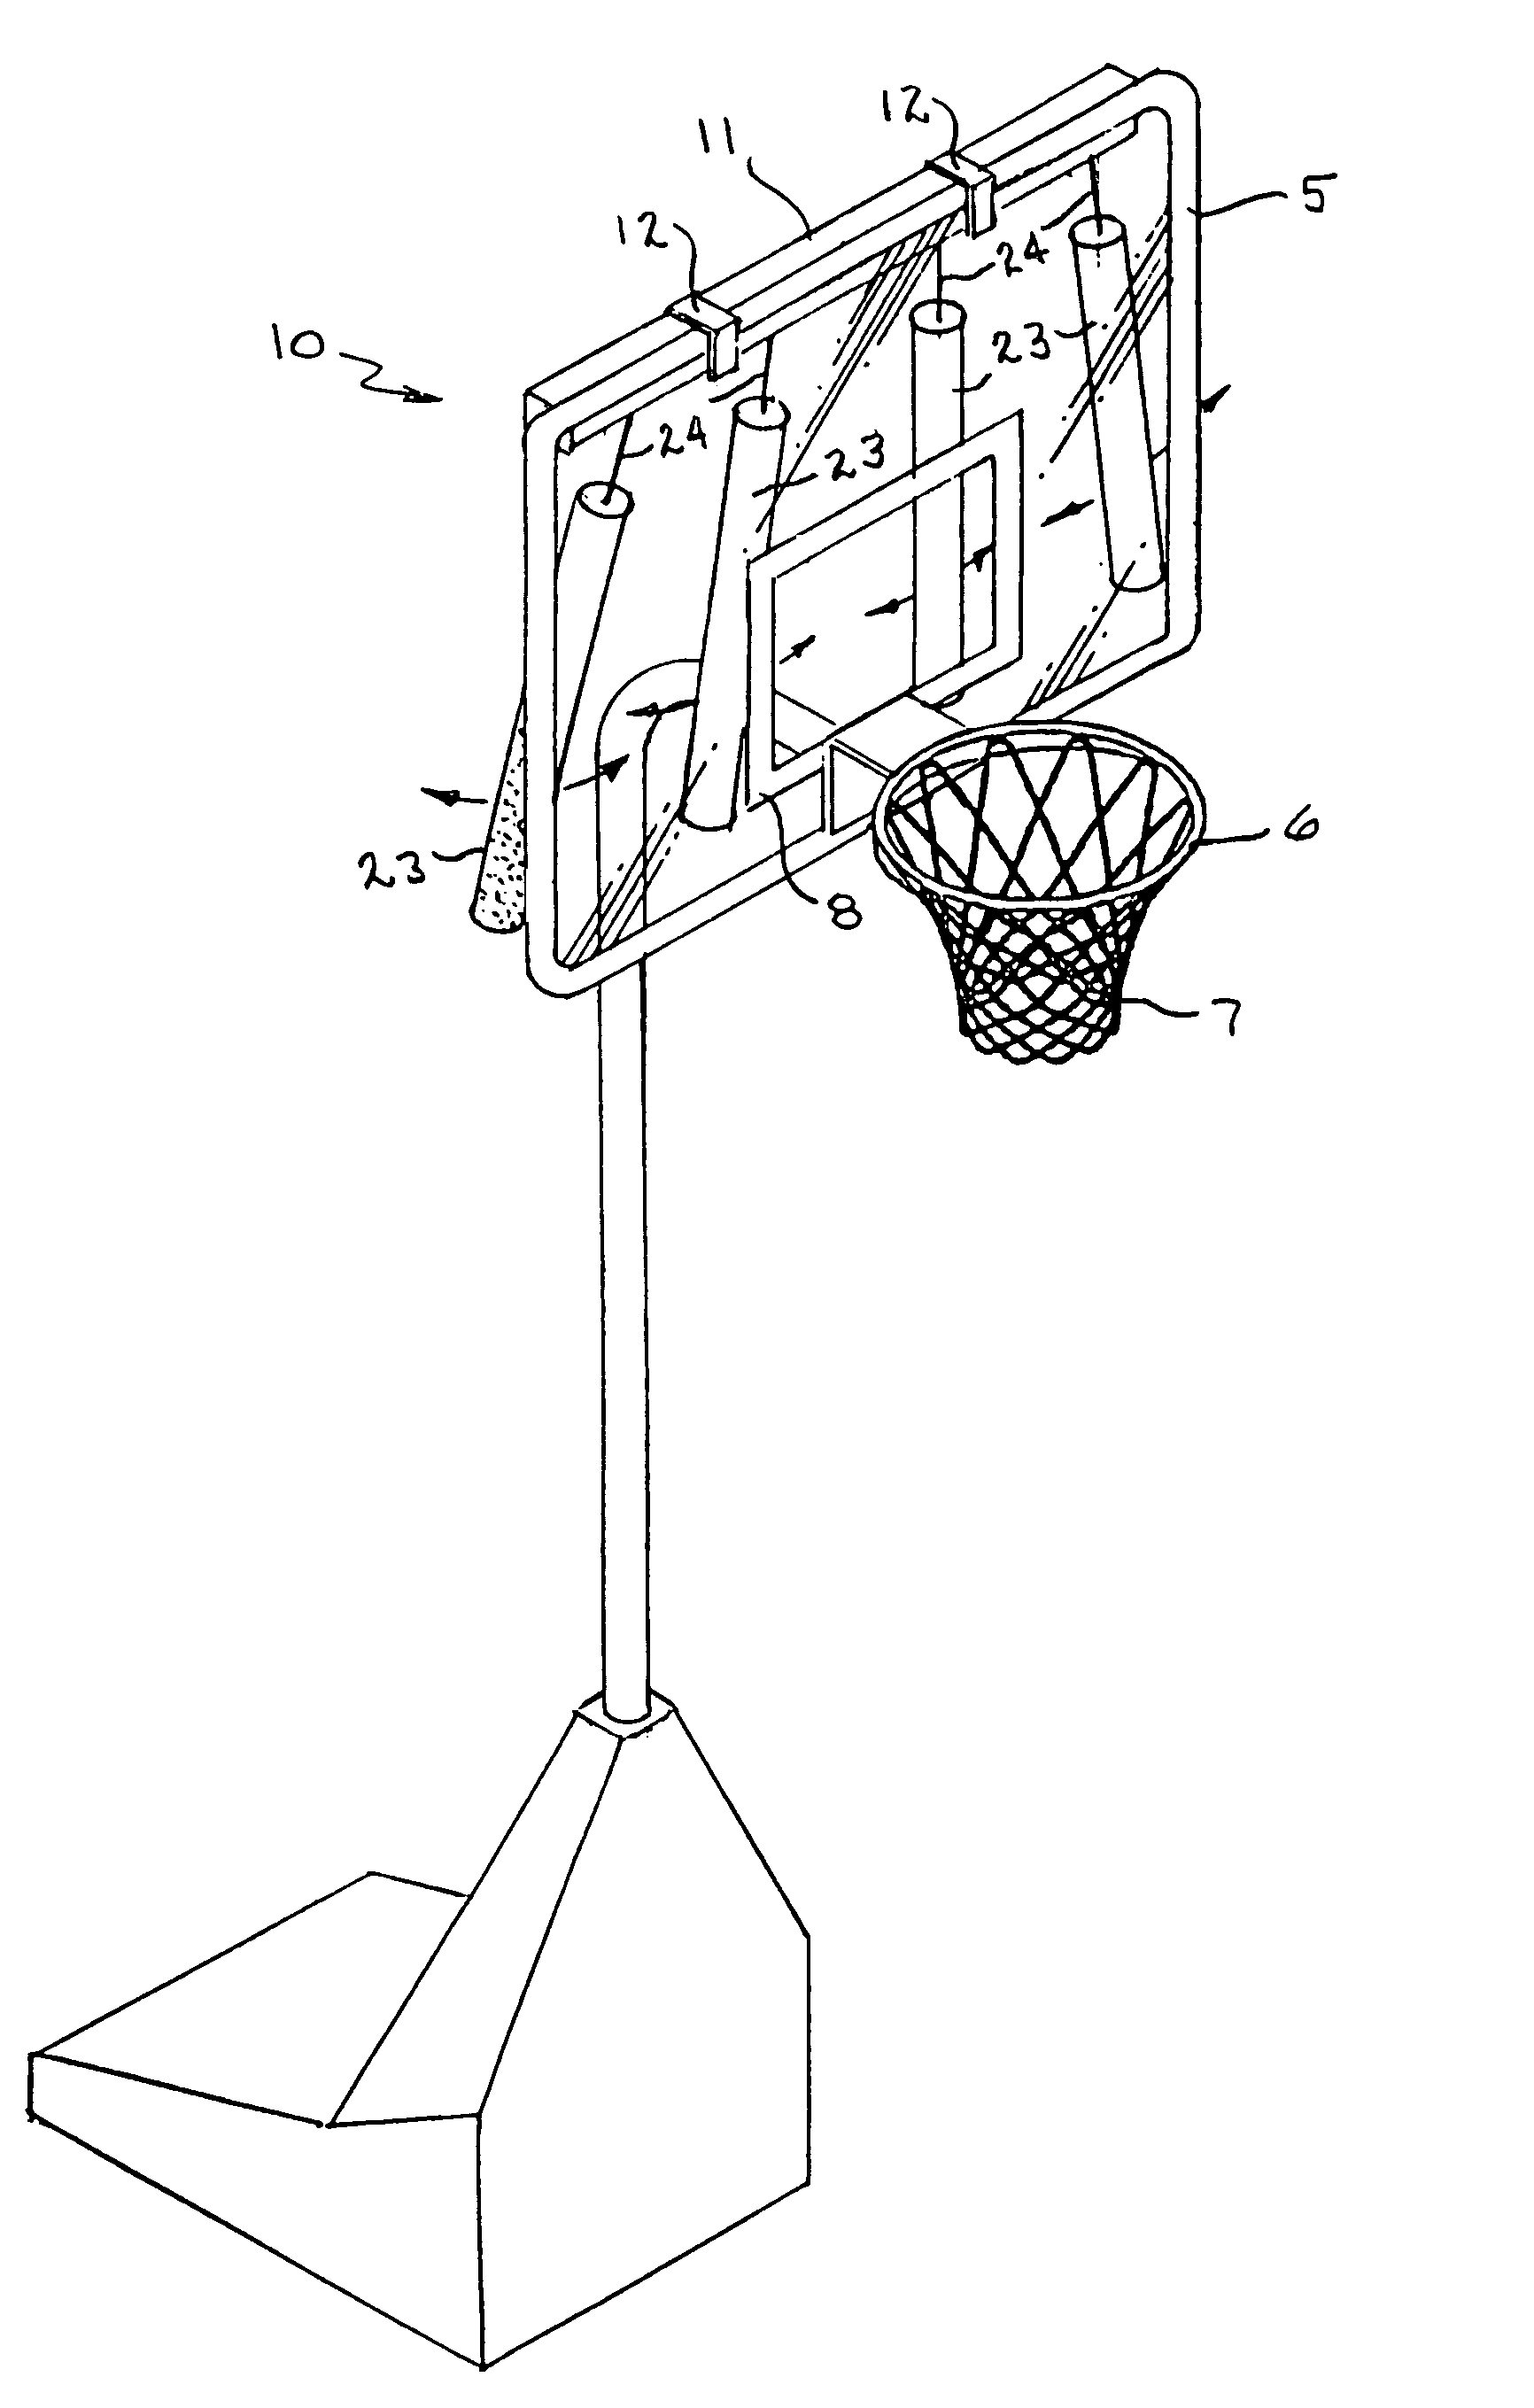 Basketball training device and method